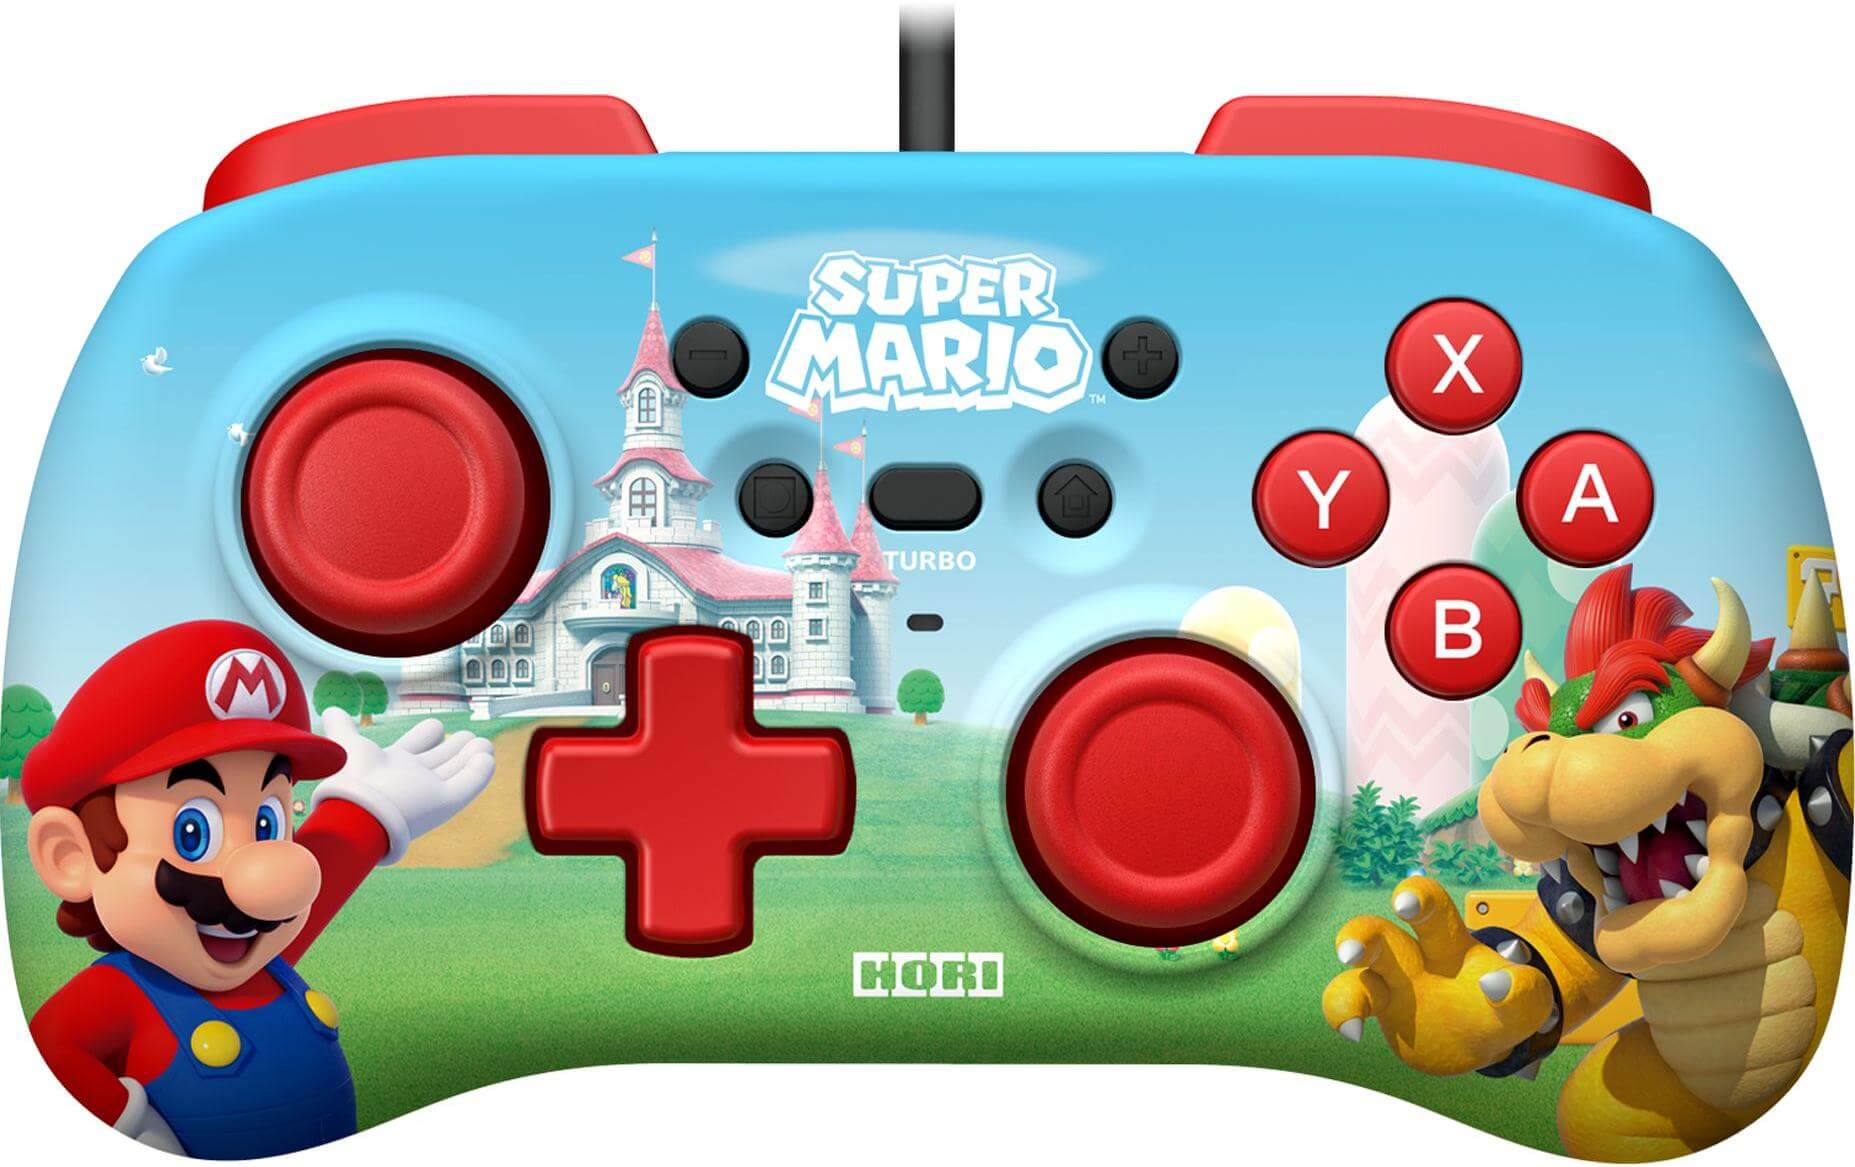 HORI Horipad Mini – Super Mario gaming controller Bleu Vert Rouge